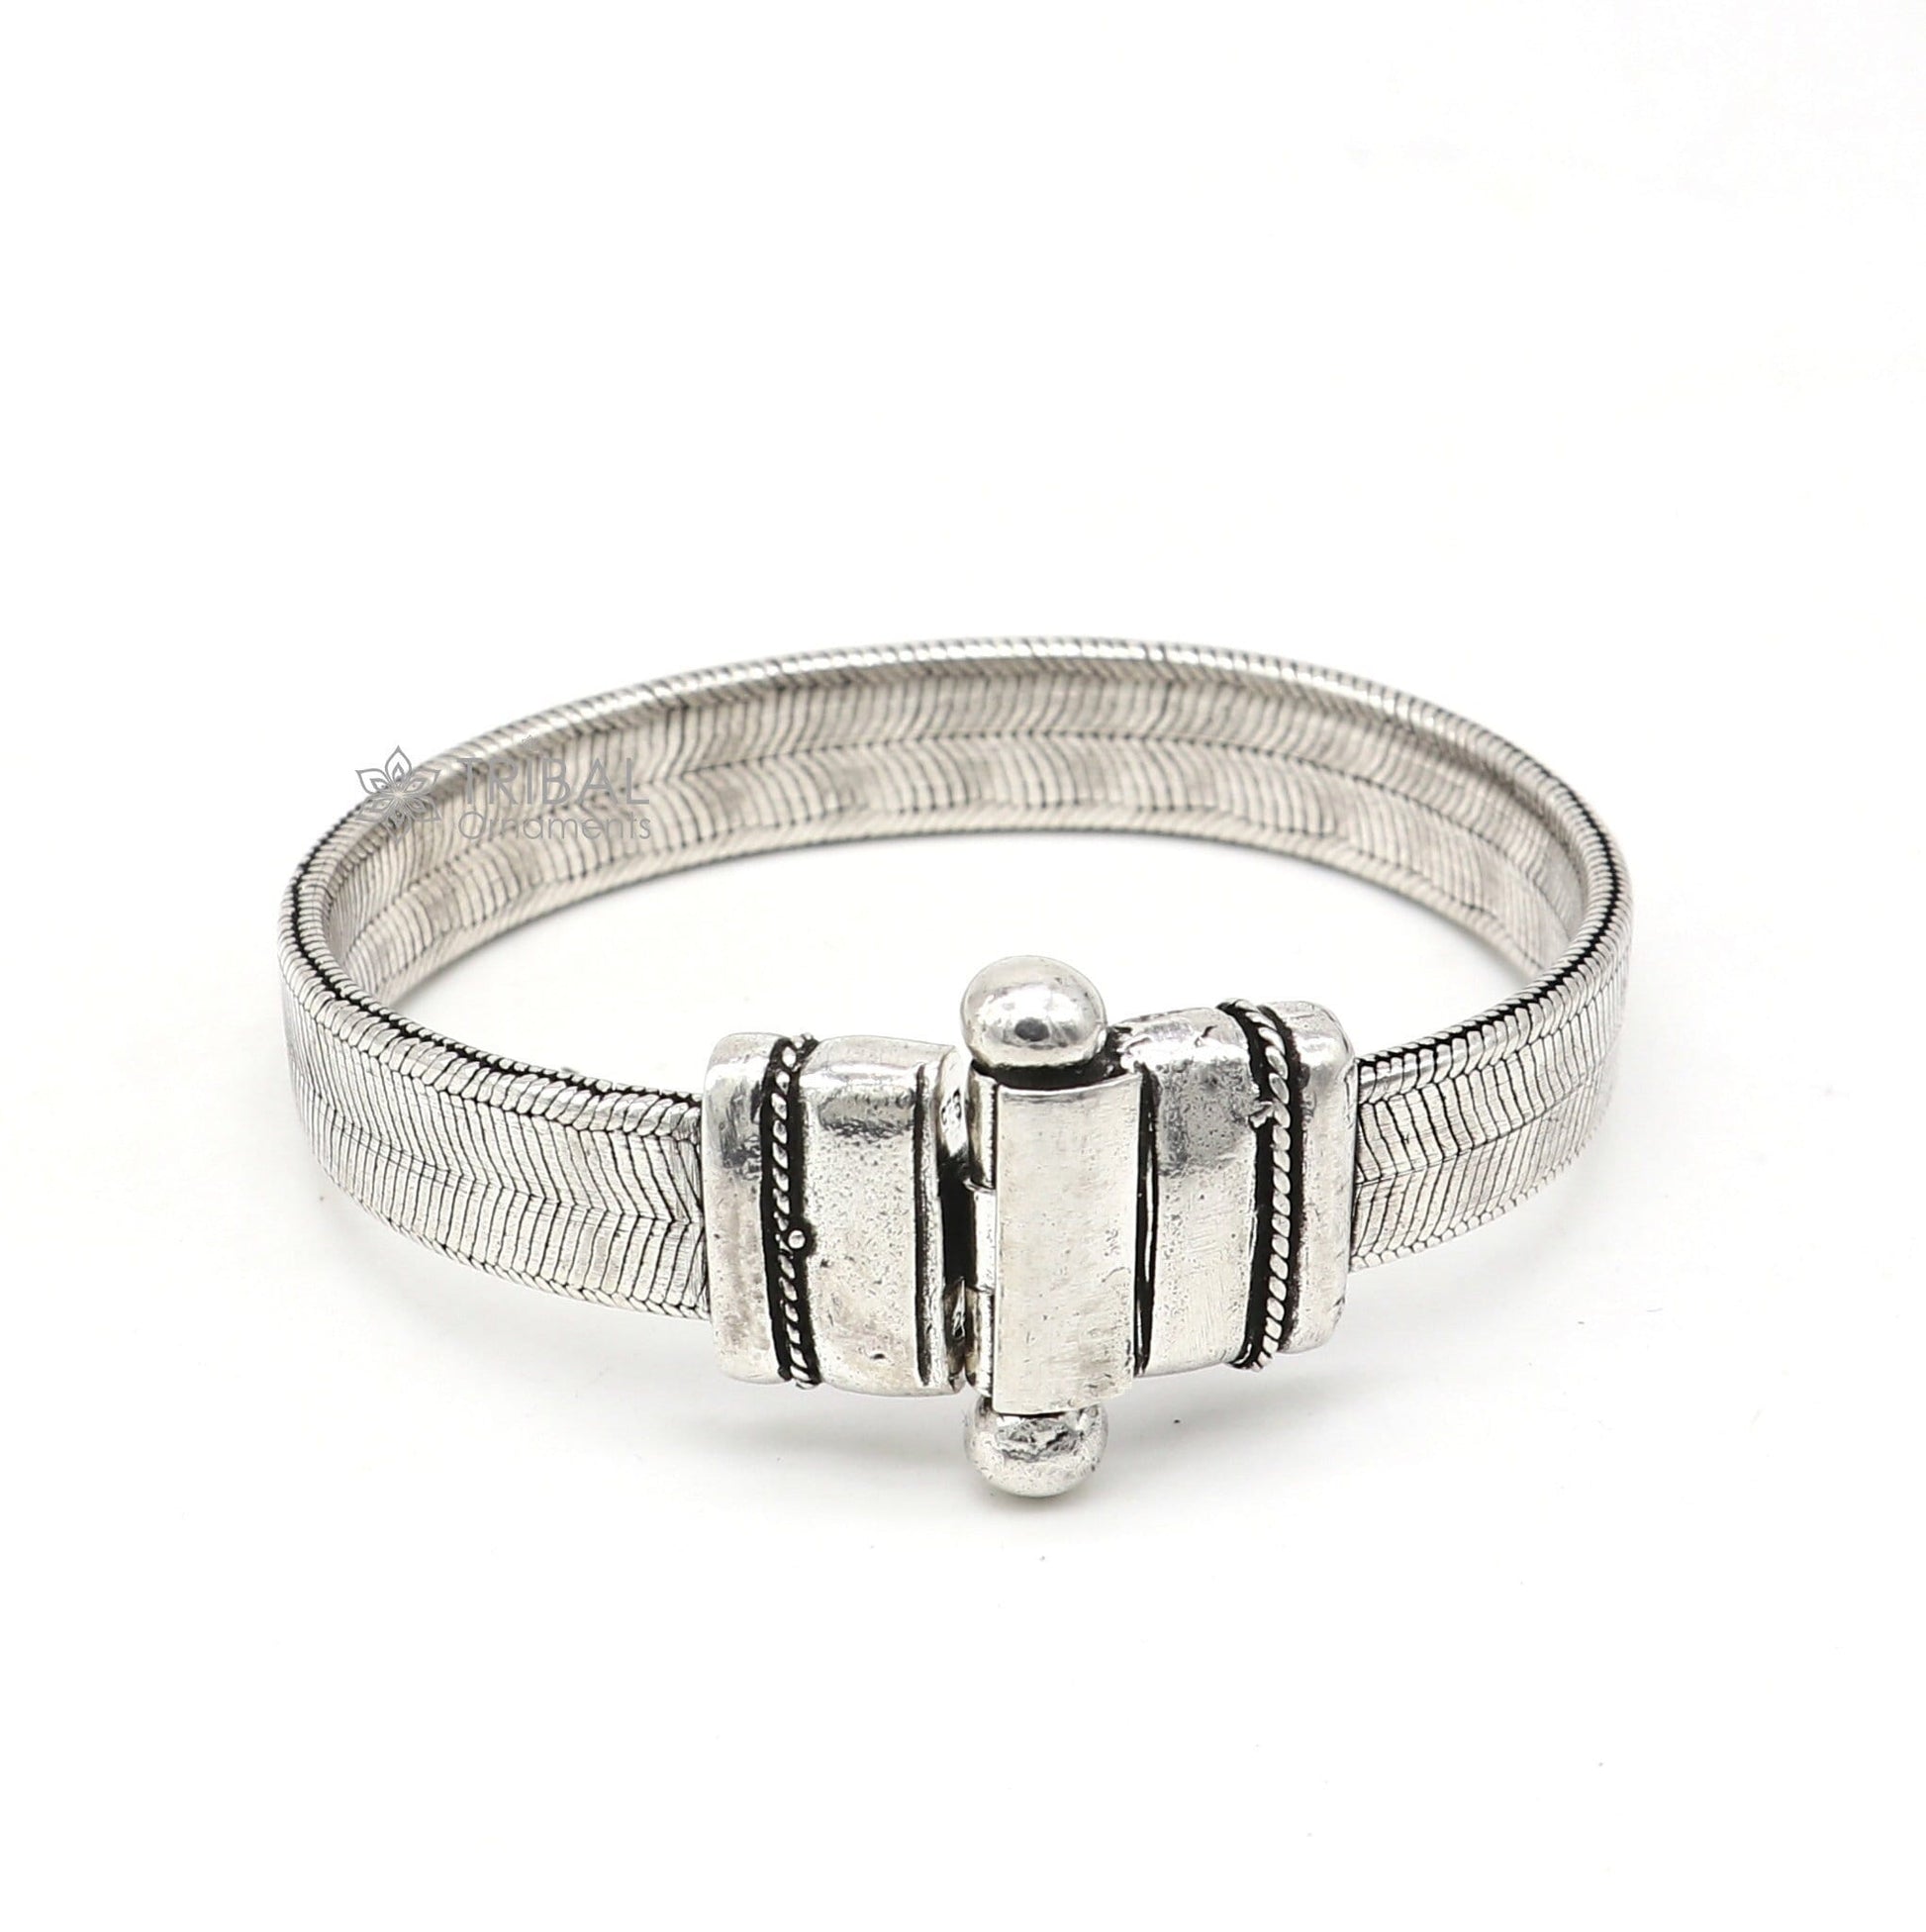 11MM" 925 sterling silver customized snake chain belt bracelet vintage design stylish men's gifting wrist belt jewelry sbr728 - TRIBAL ORNAMENTS